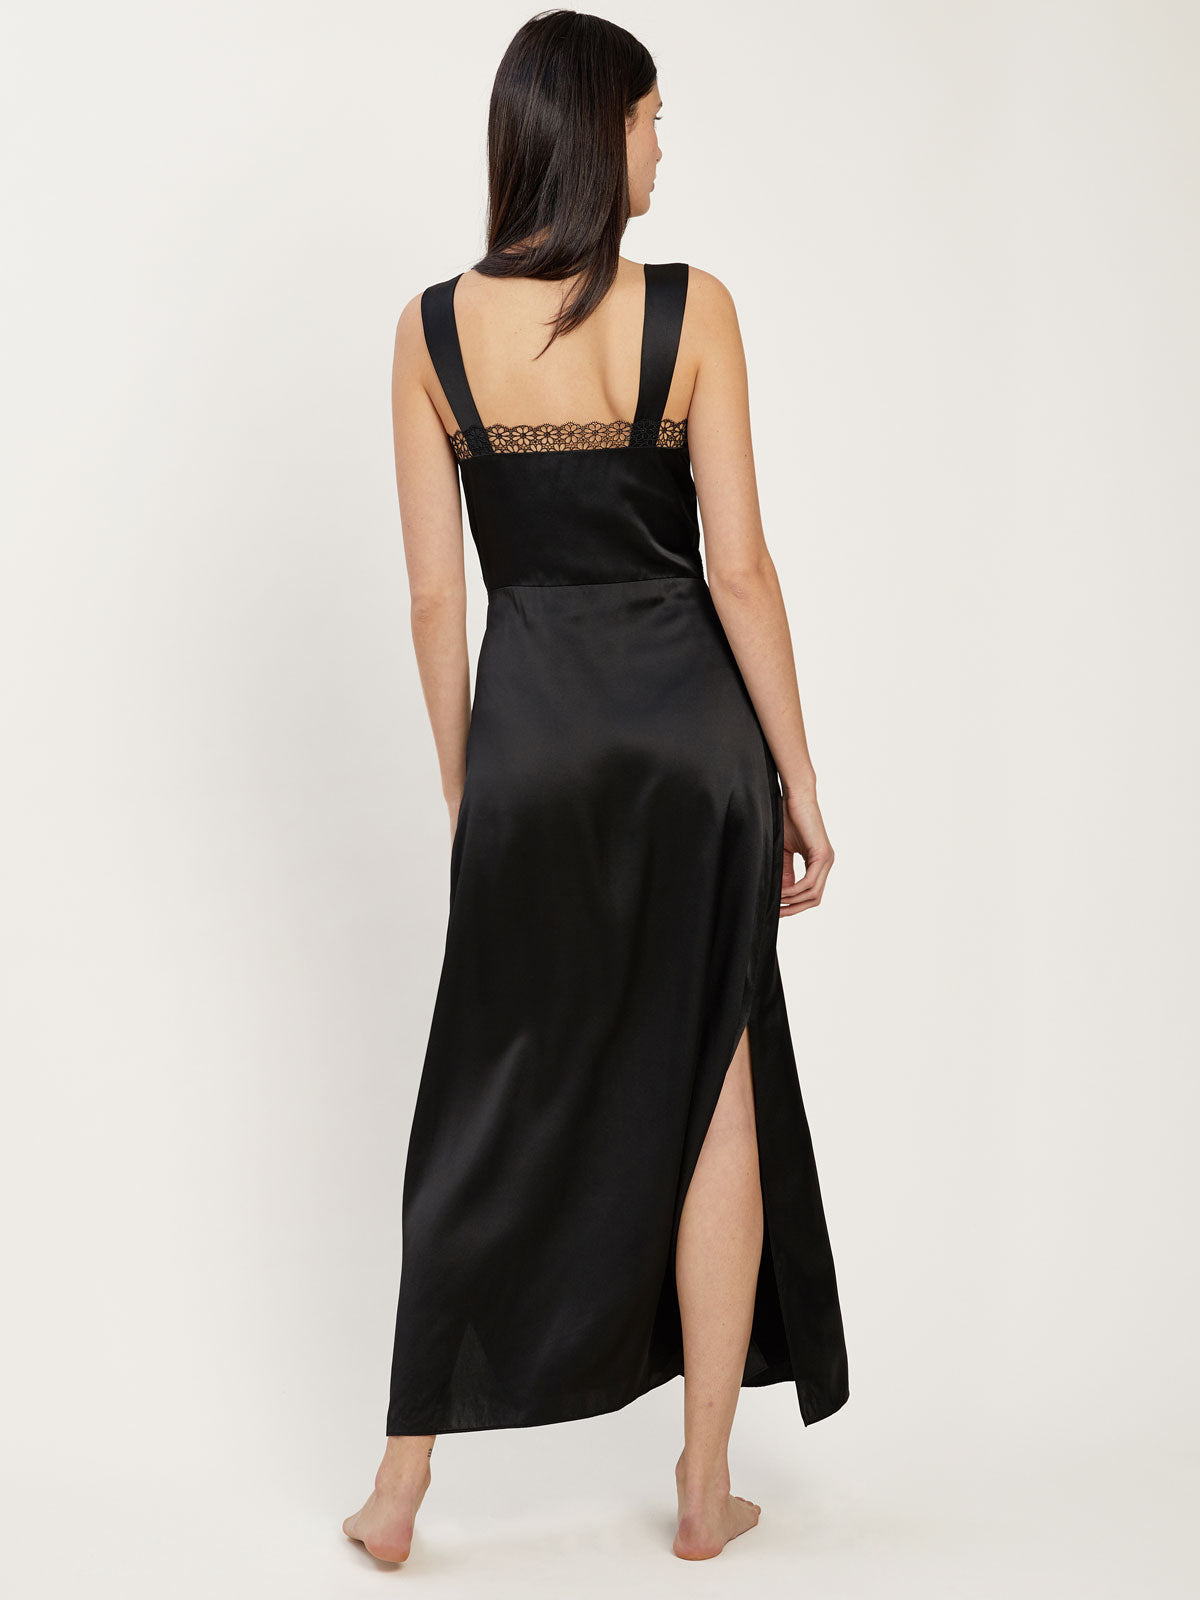 Sisto Dress in Midnight Preorder By Morgan Lane